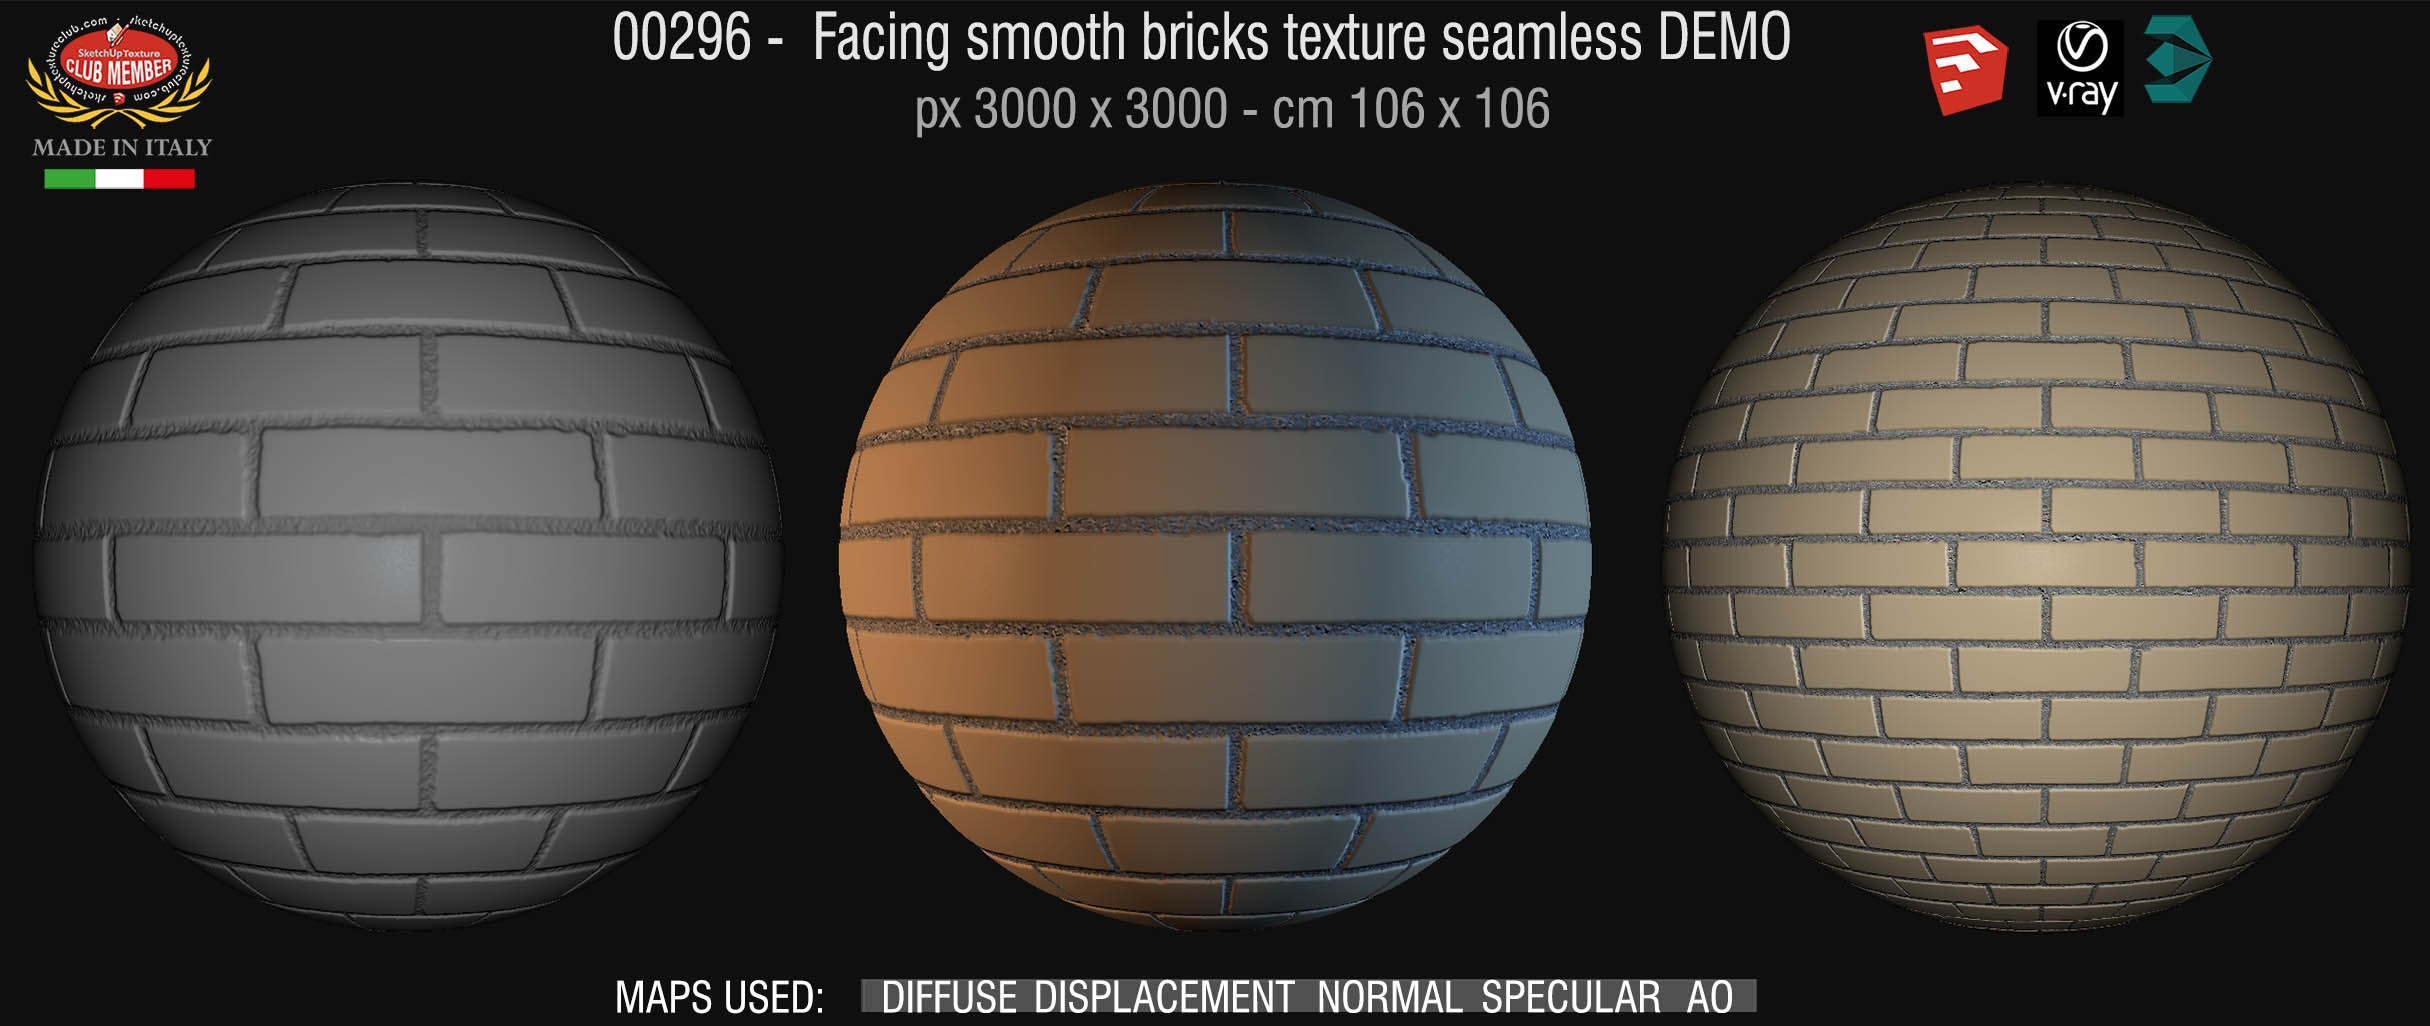 00296 Facing smooth bricks texture seamless + maps DEMO